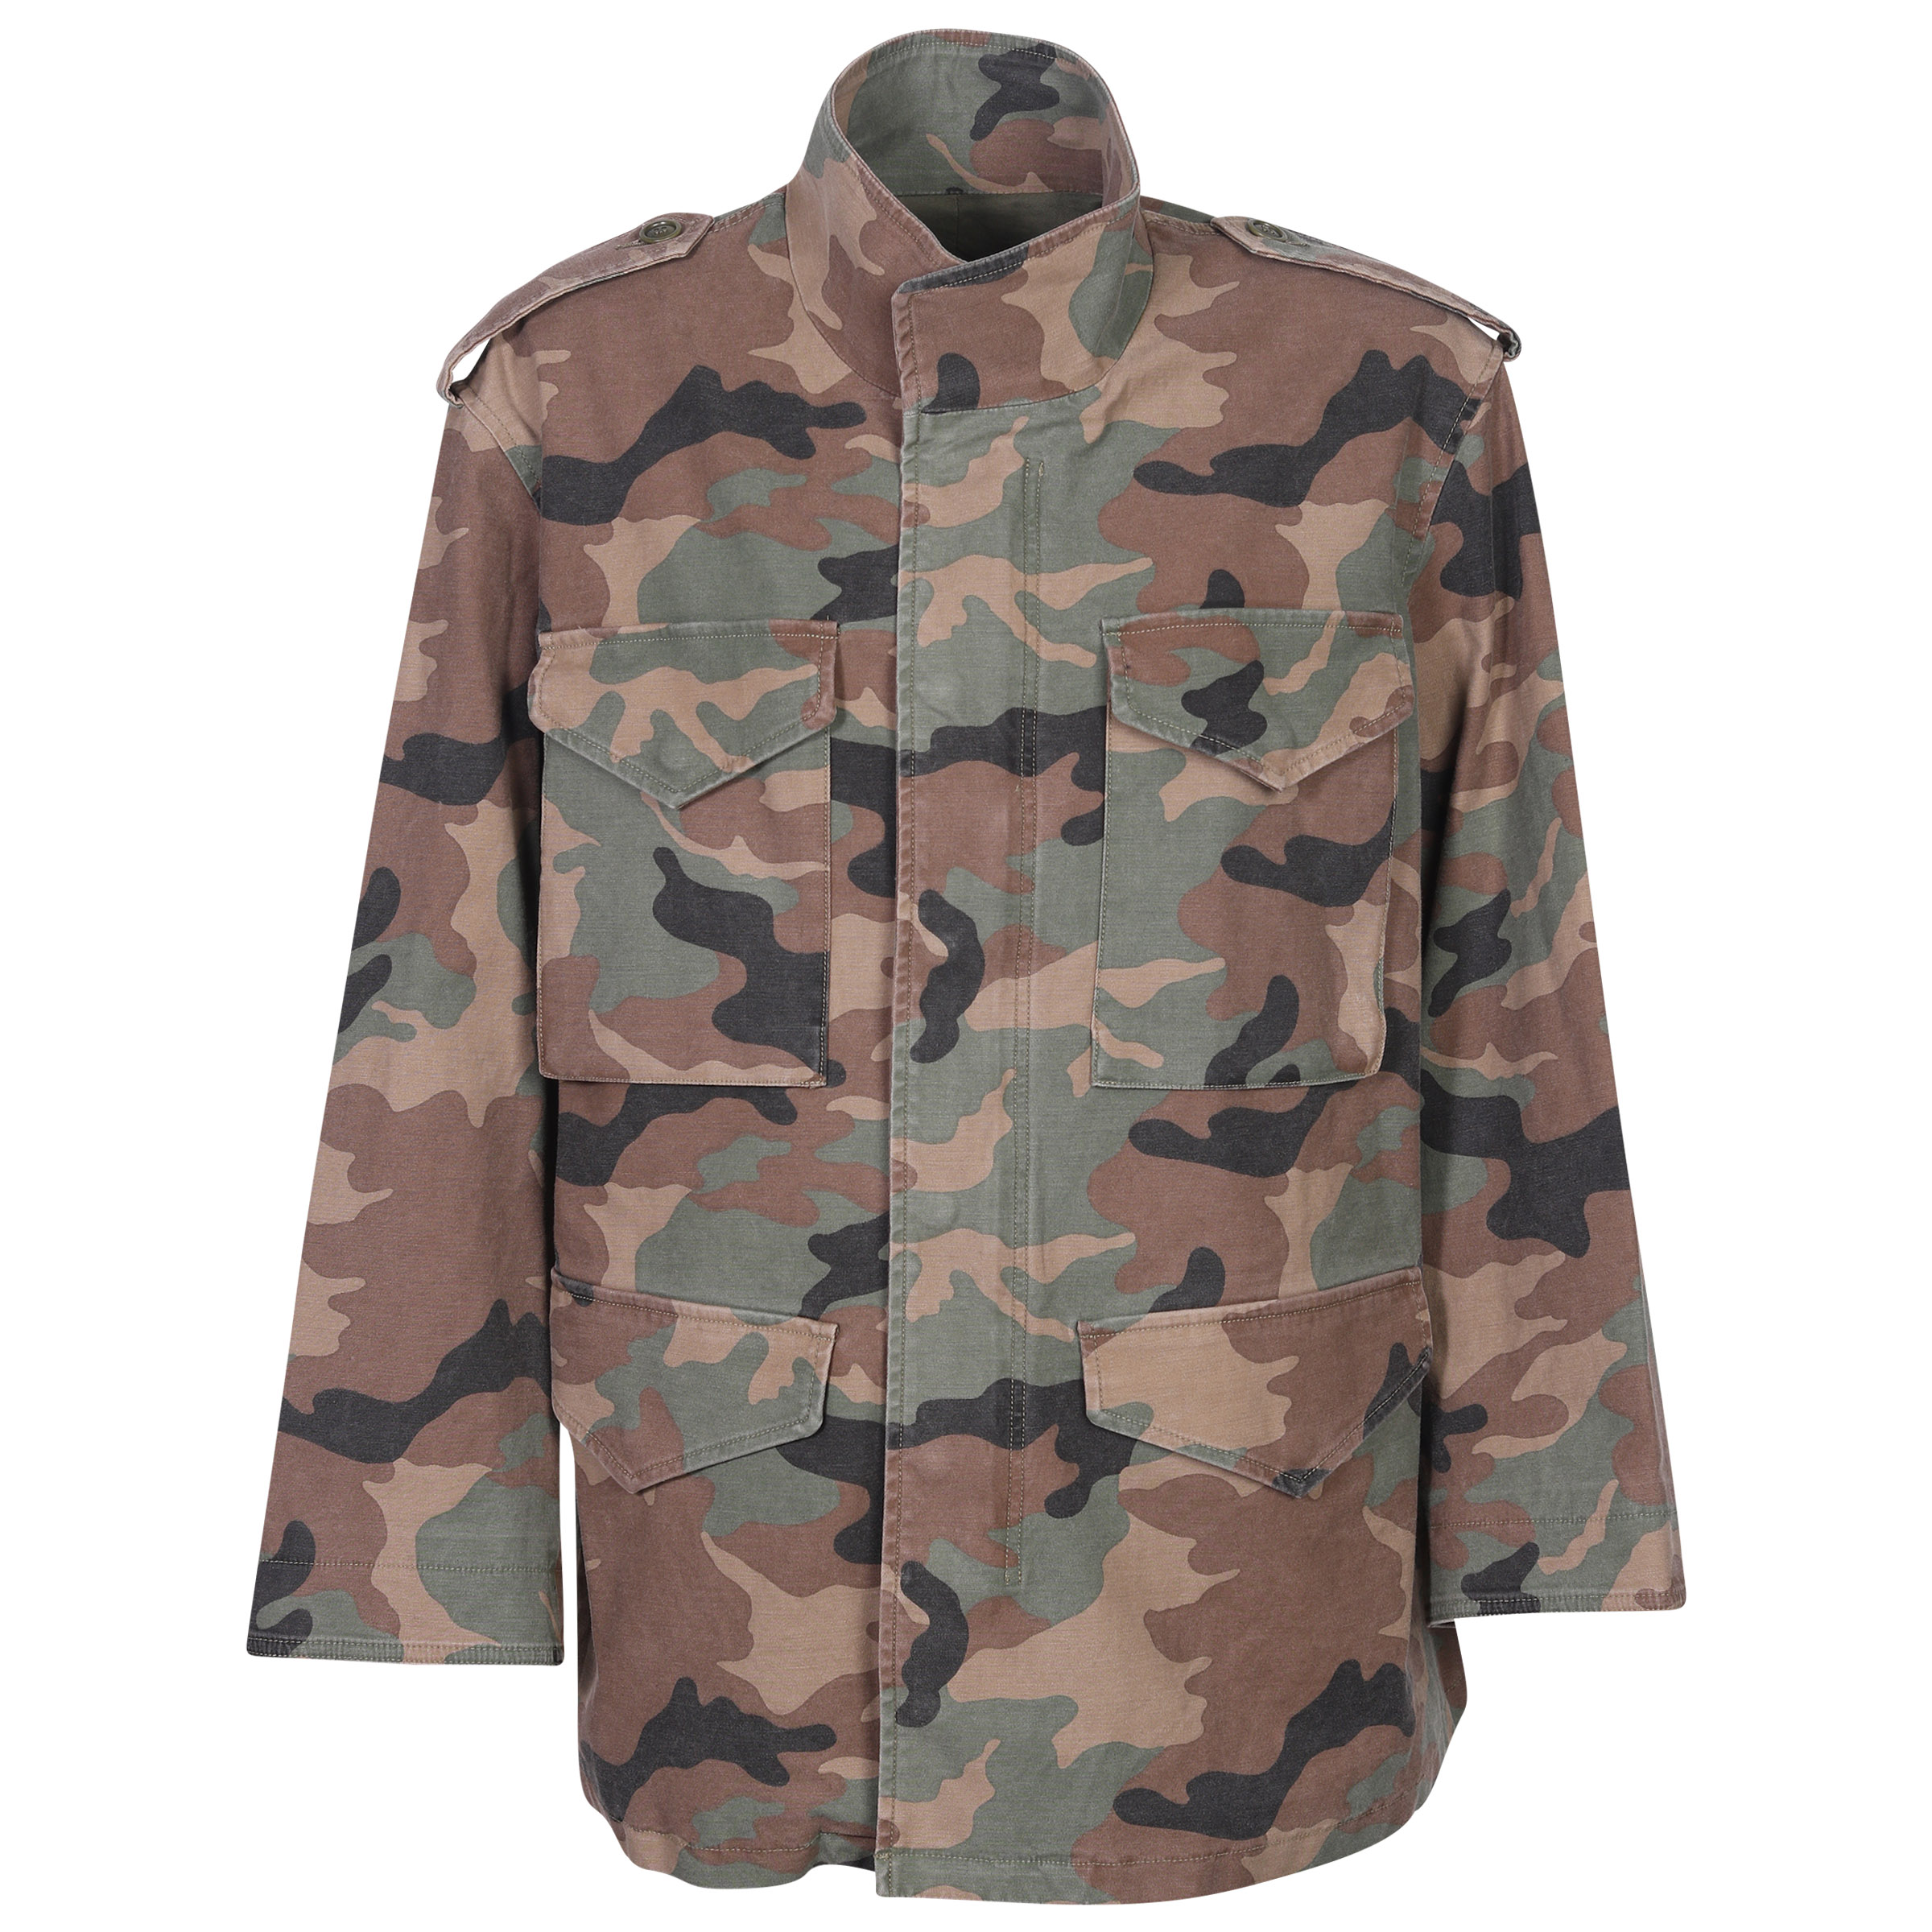 Nili Lotan Jackie Camo Army Jacket in Dark Green Camouflage